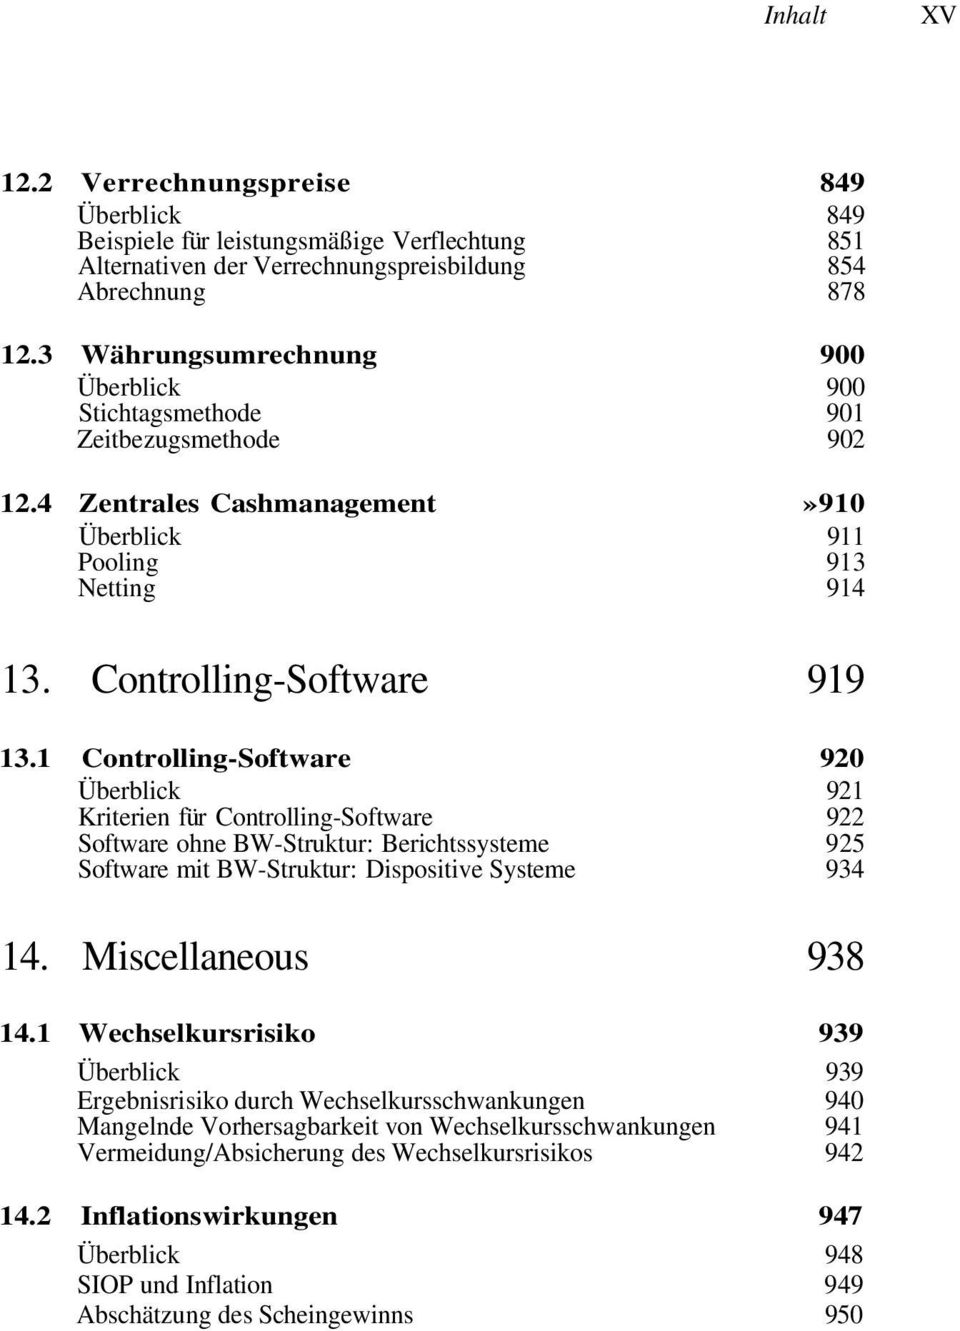 1 Controlling-Software 920 921 Kriterien für Controlling-Software 922 Software ohne BW-Struktur: Berichtssysteme Software mit BW-Struktur: Dispositive Systeme 925 934 14. Miscellaneous 938 14.